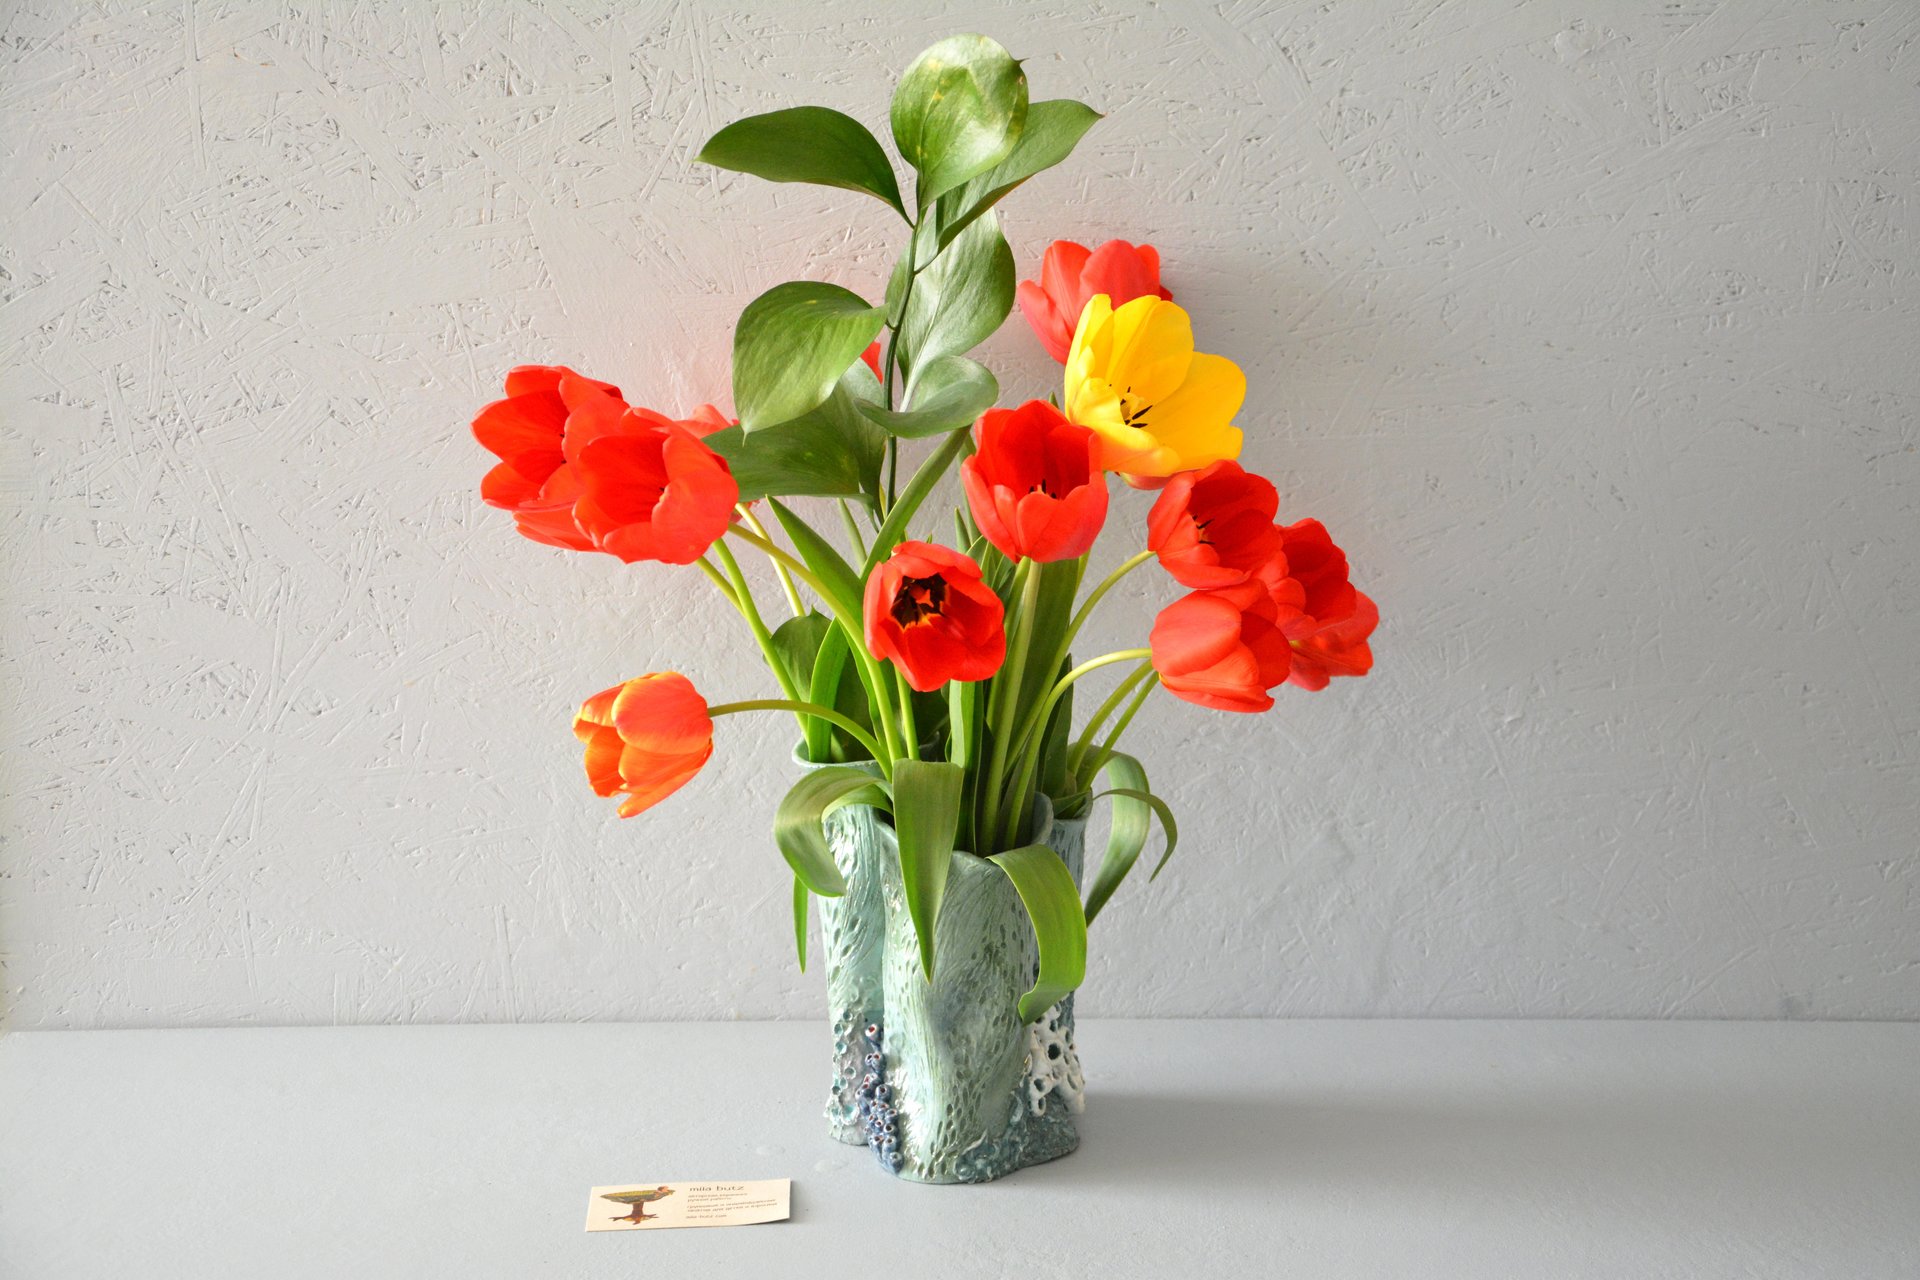 Decorative ceramic flower vase — Coral, height - 19 cm, photo 5 of 5. 1042.